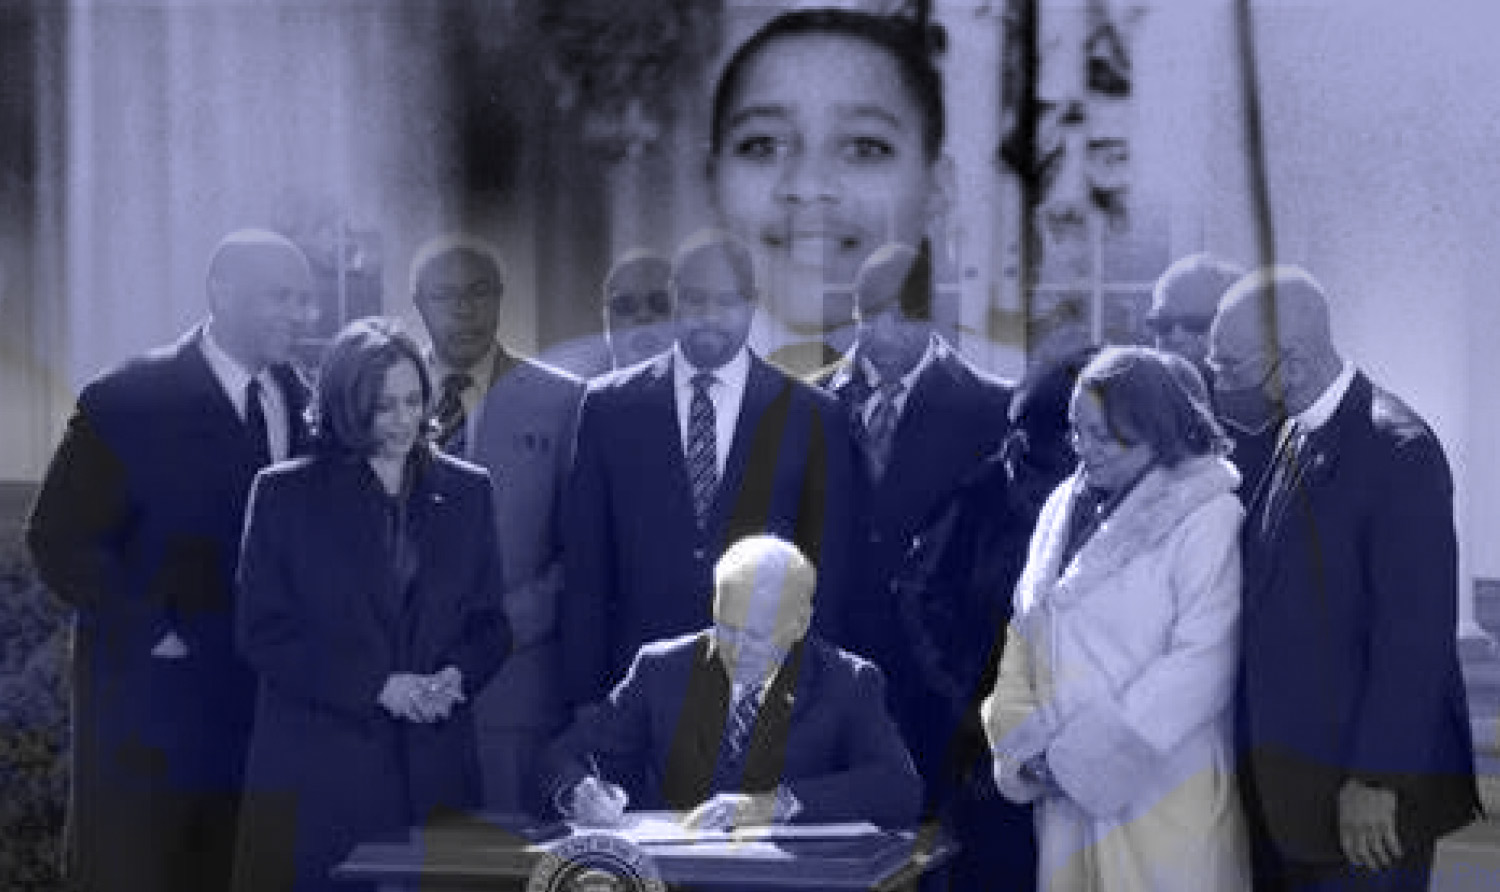 a photo of Emmett Till imposed over a photo of President Joe Biden signing a bill at a desk